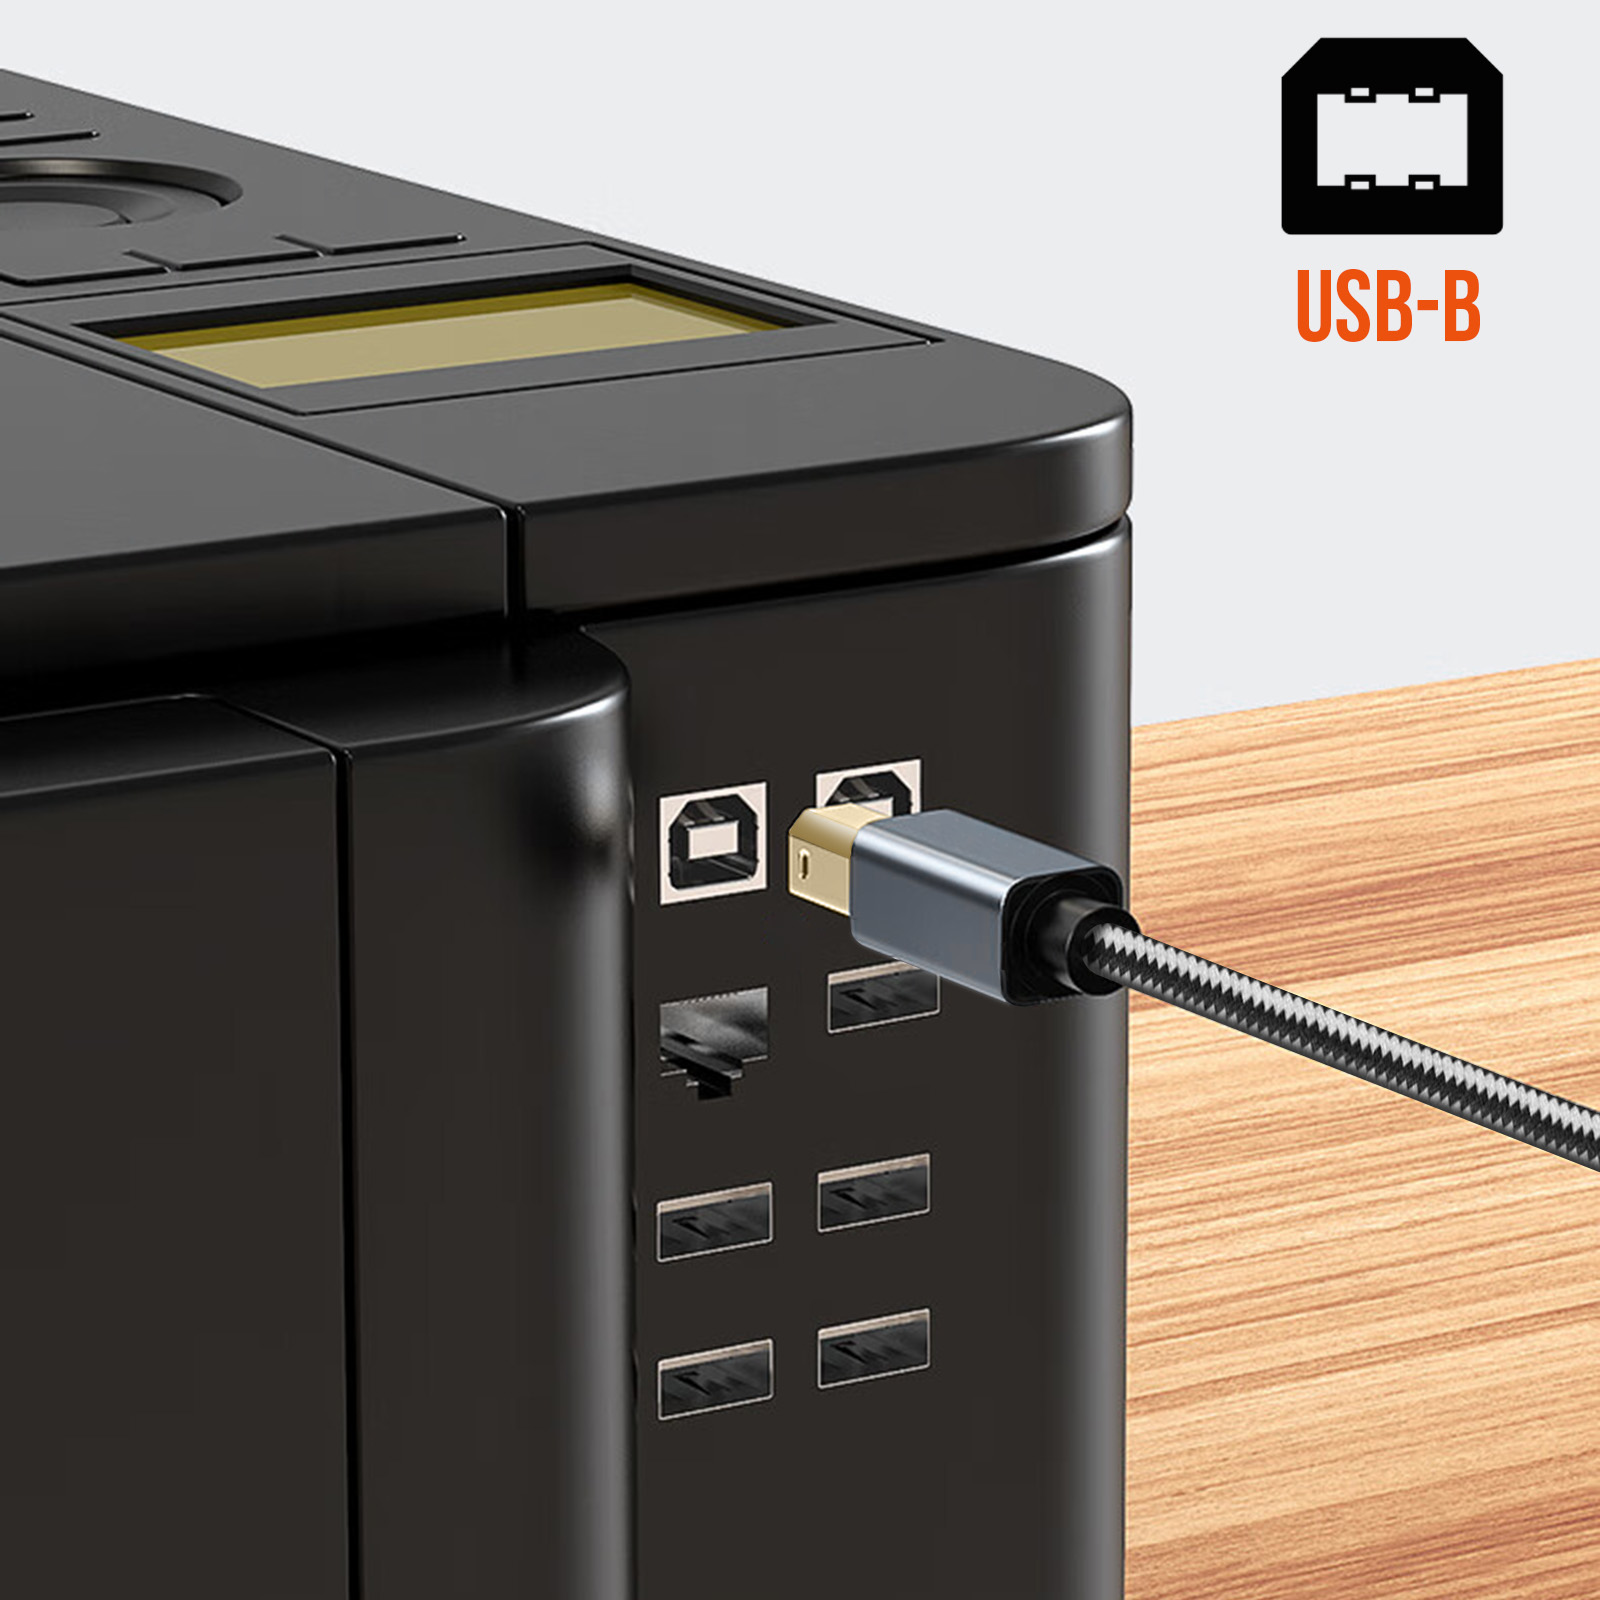 LINQ USB 2.0 3 A/USB Druckerkabel, m Druckerkabel, 2.0 B 3m